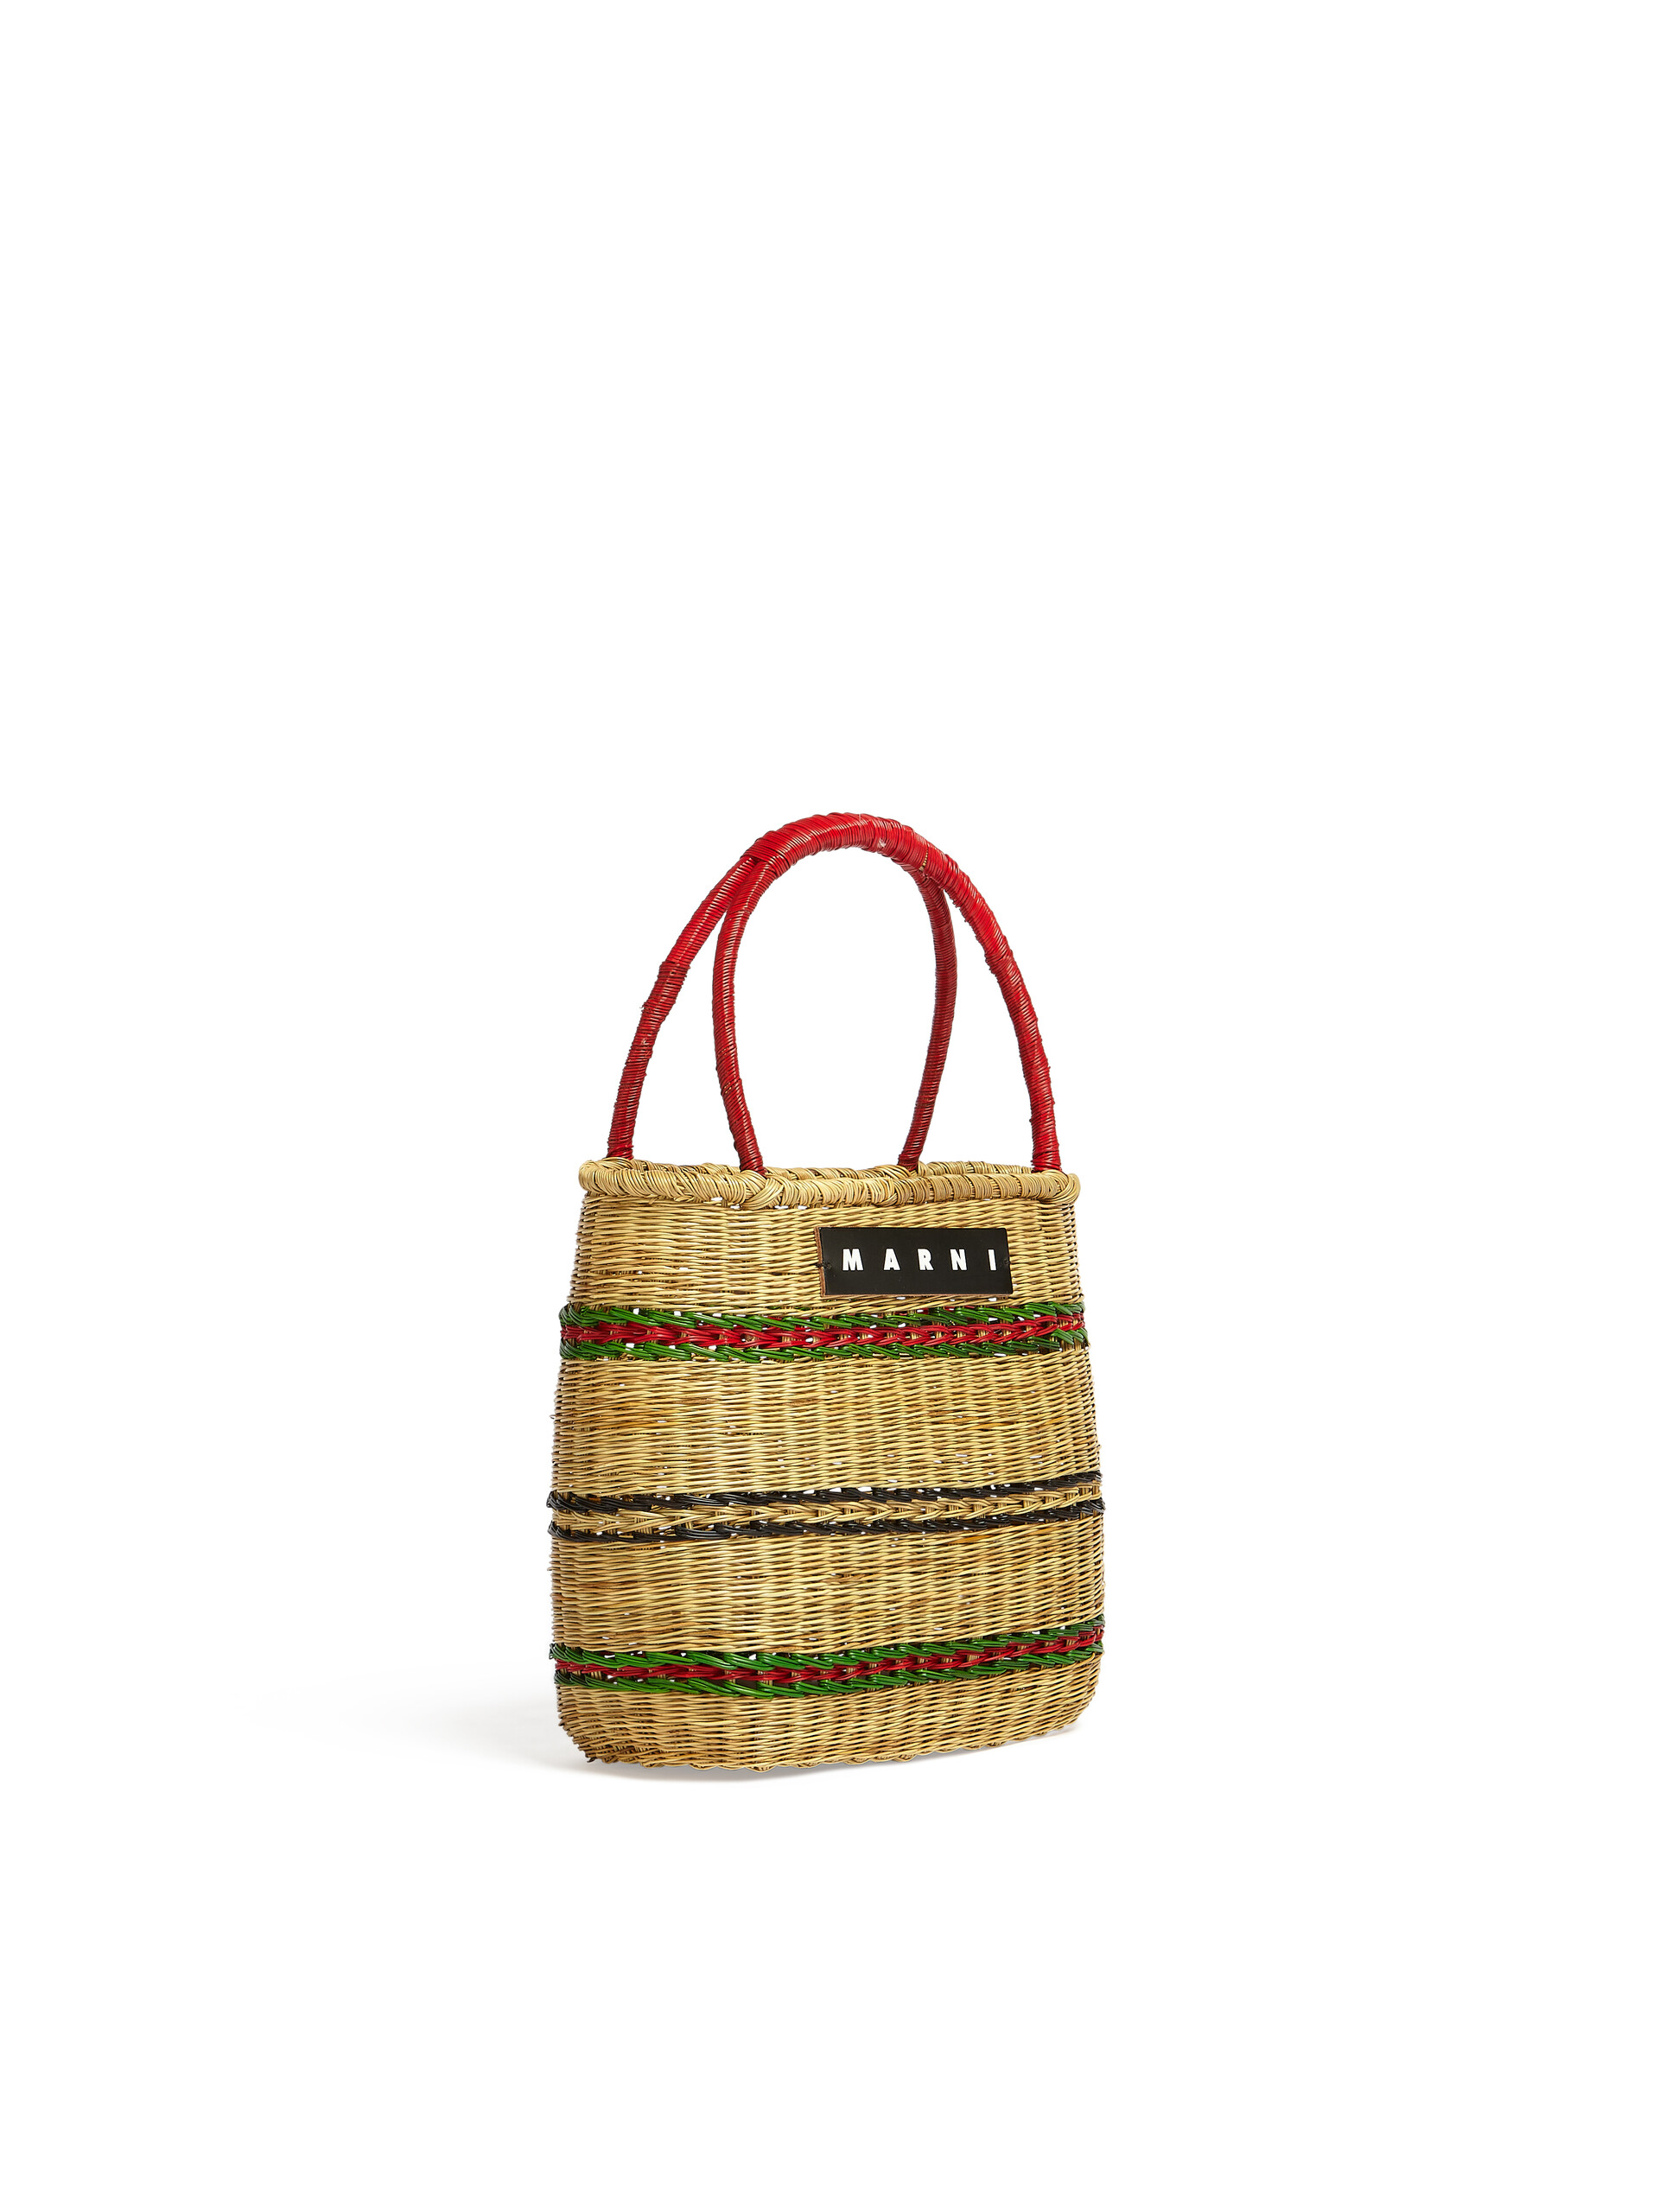 MARNI MARKET bag in green stripe natural fibre - Shopping Bags - Image 2